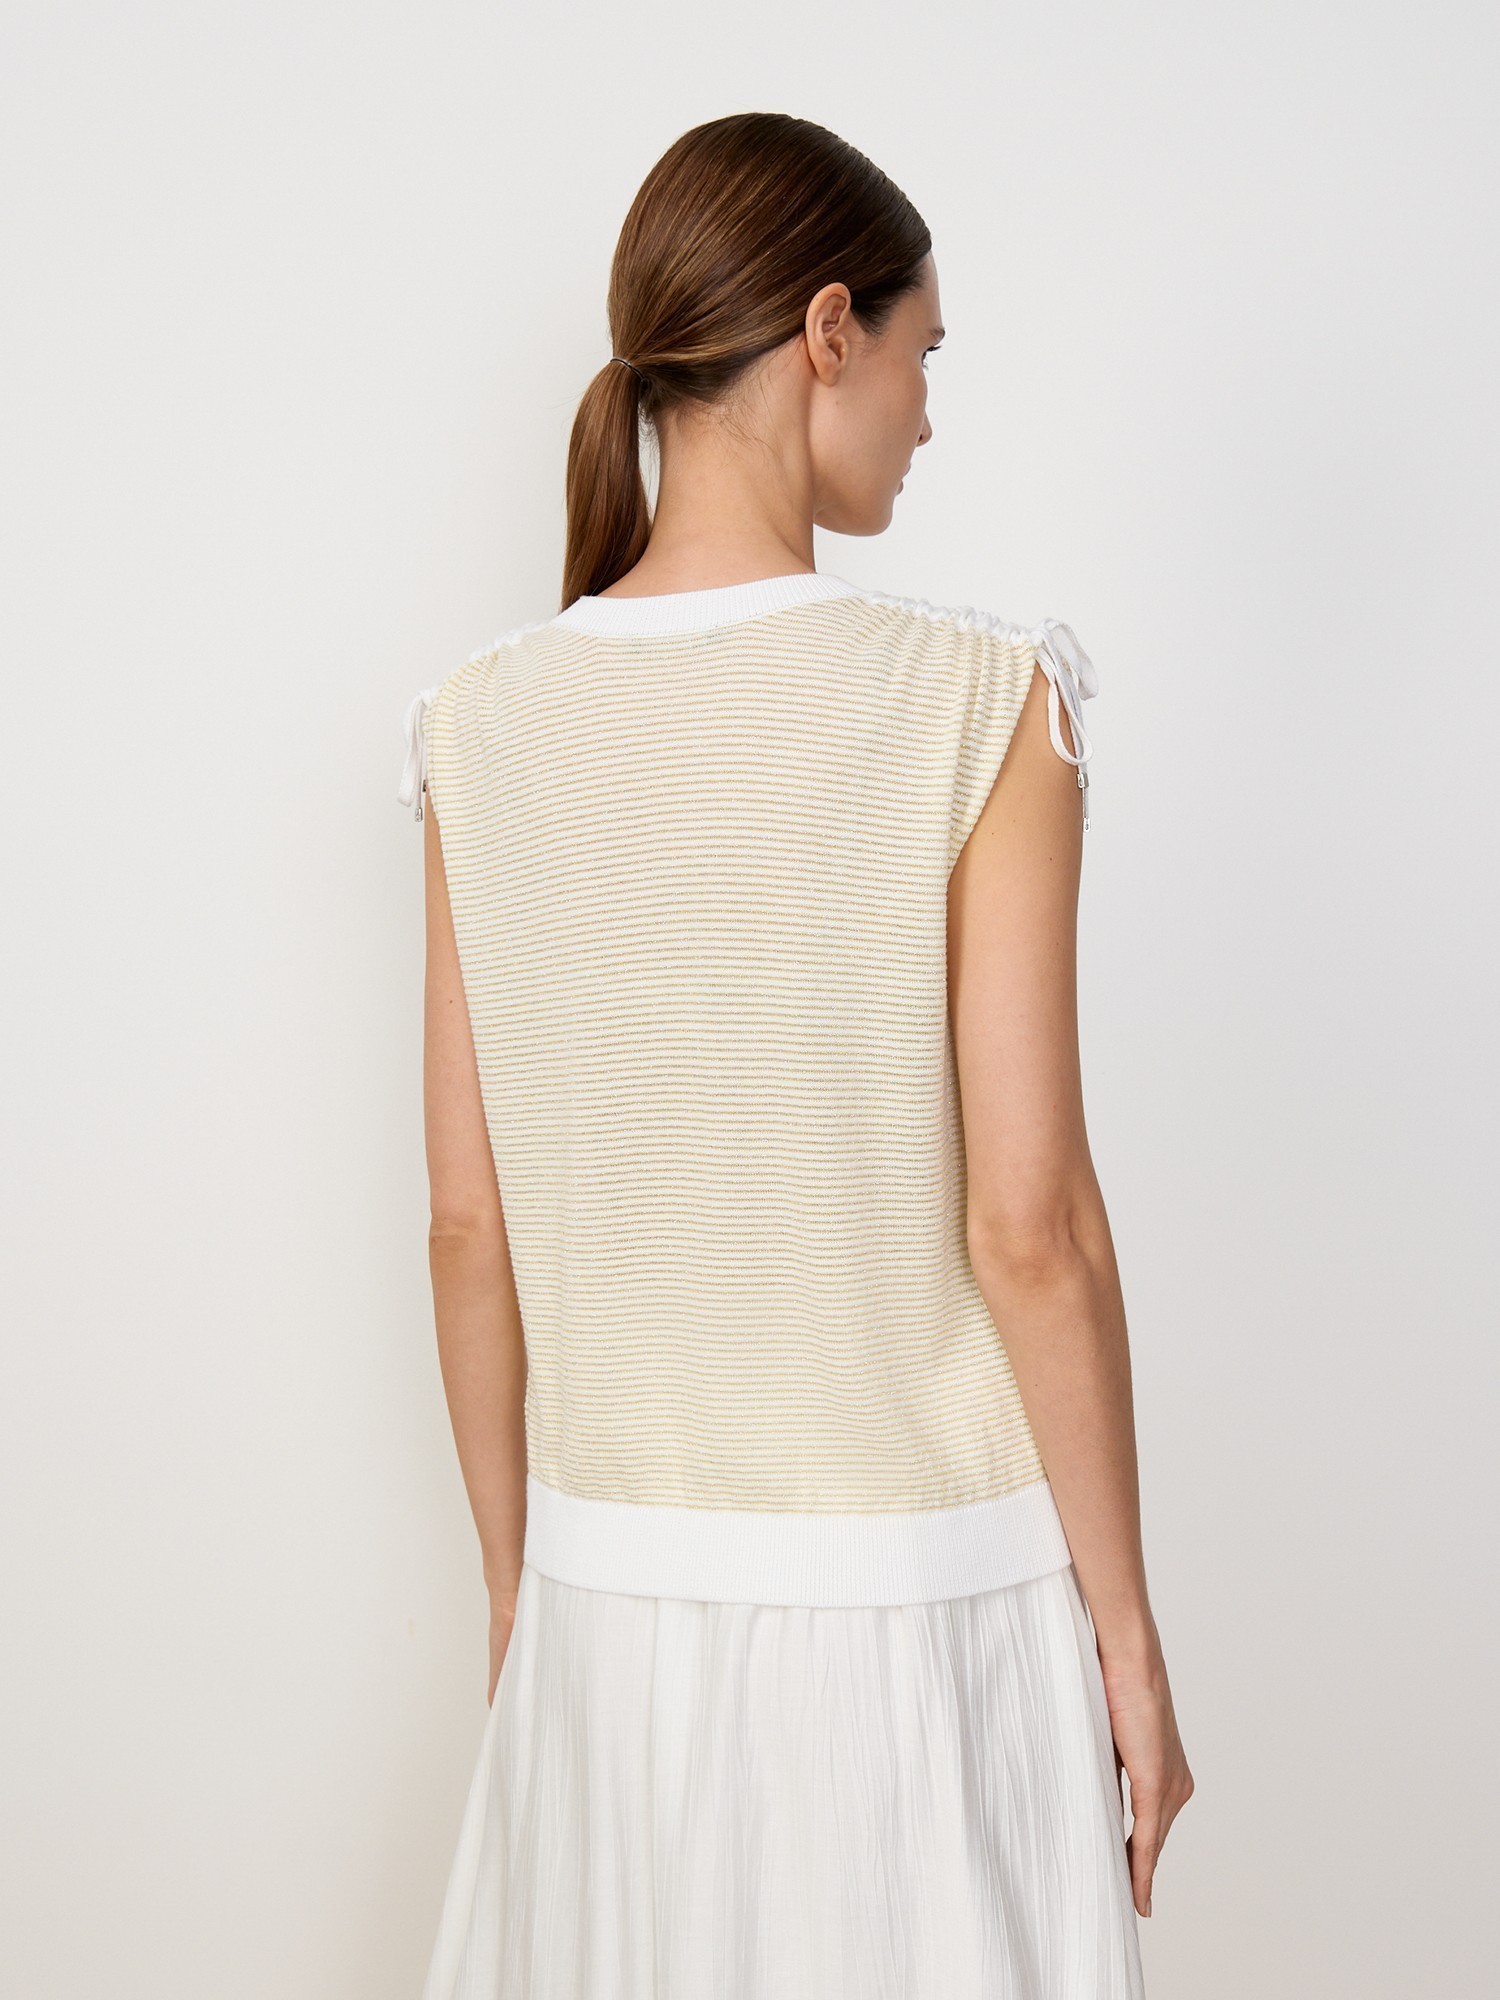 Вязаная блуза с люрексом Elis BL1054V, цвет жёлто-белый, размер 42 - фото 4